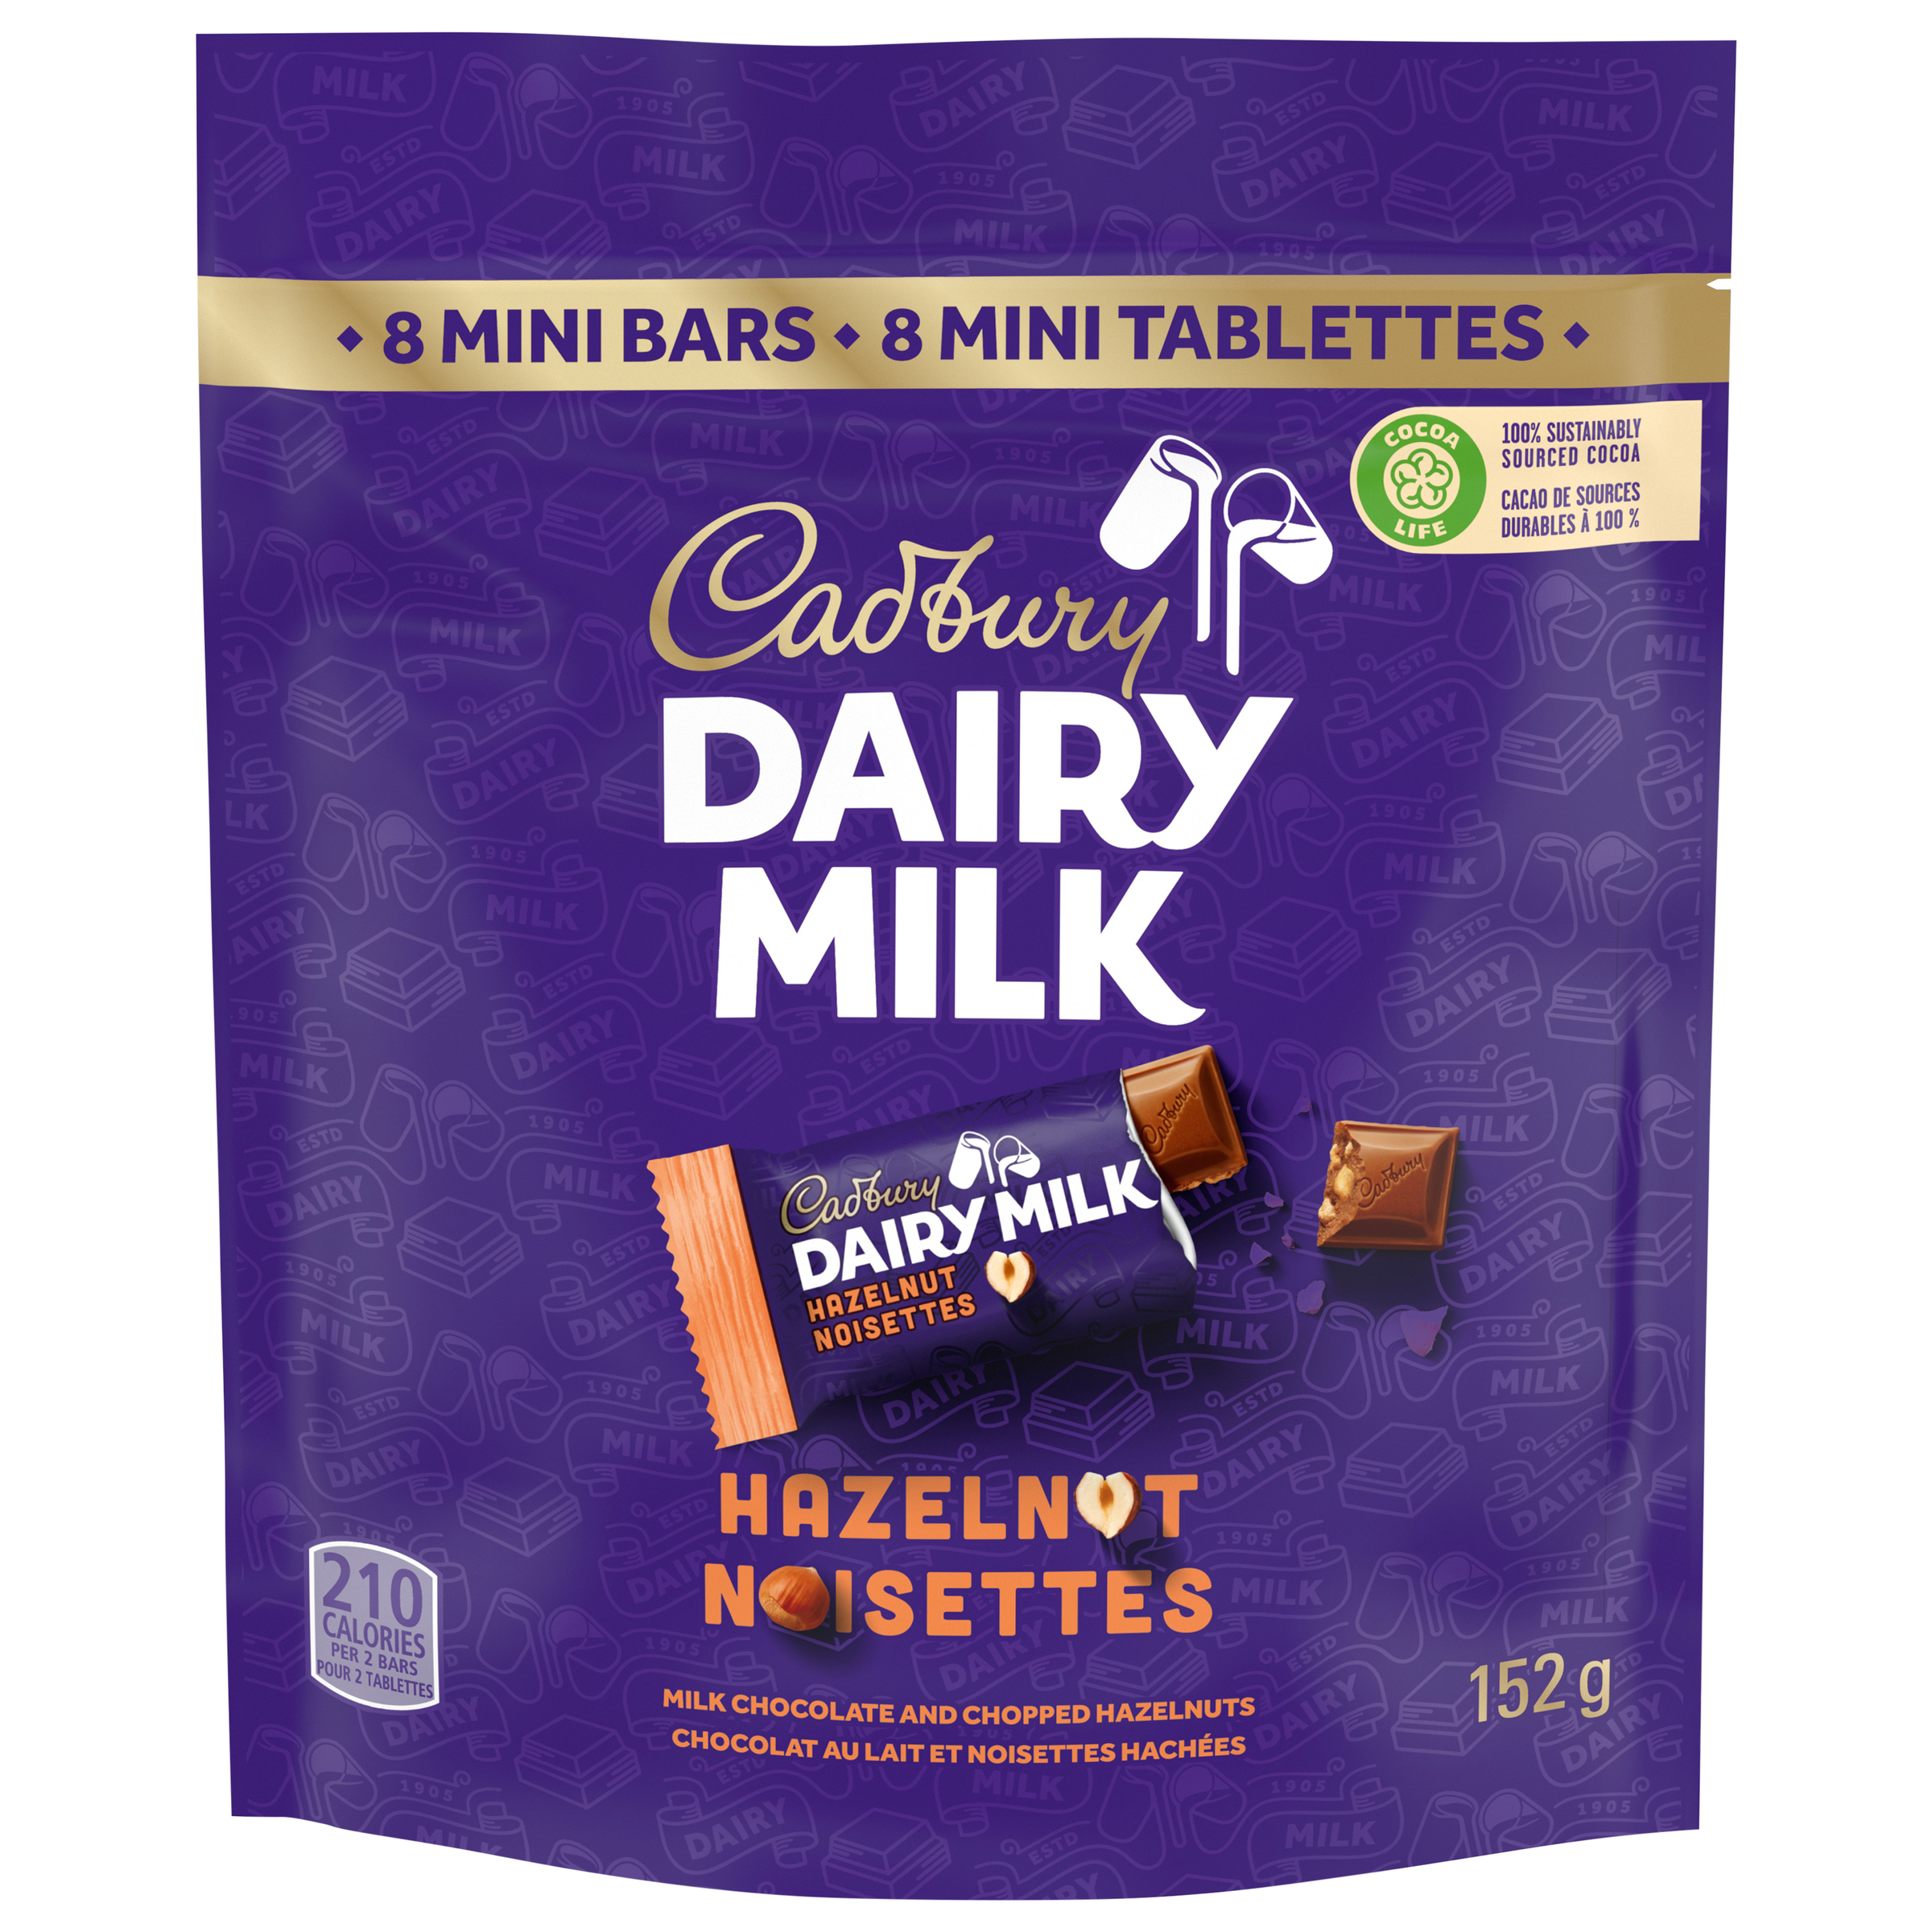 Cadbury Dairy Milk Hazelnut, Mini Chocolate Bars, 8 count, 152 g